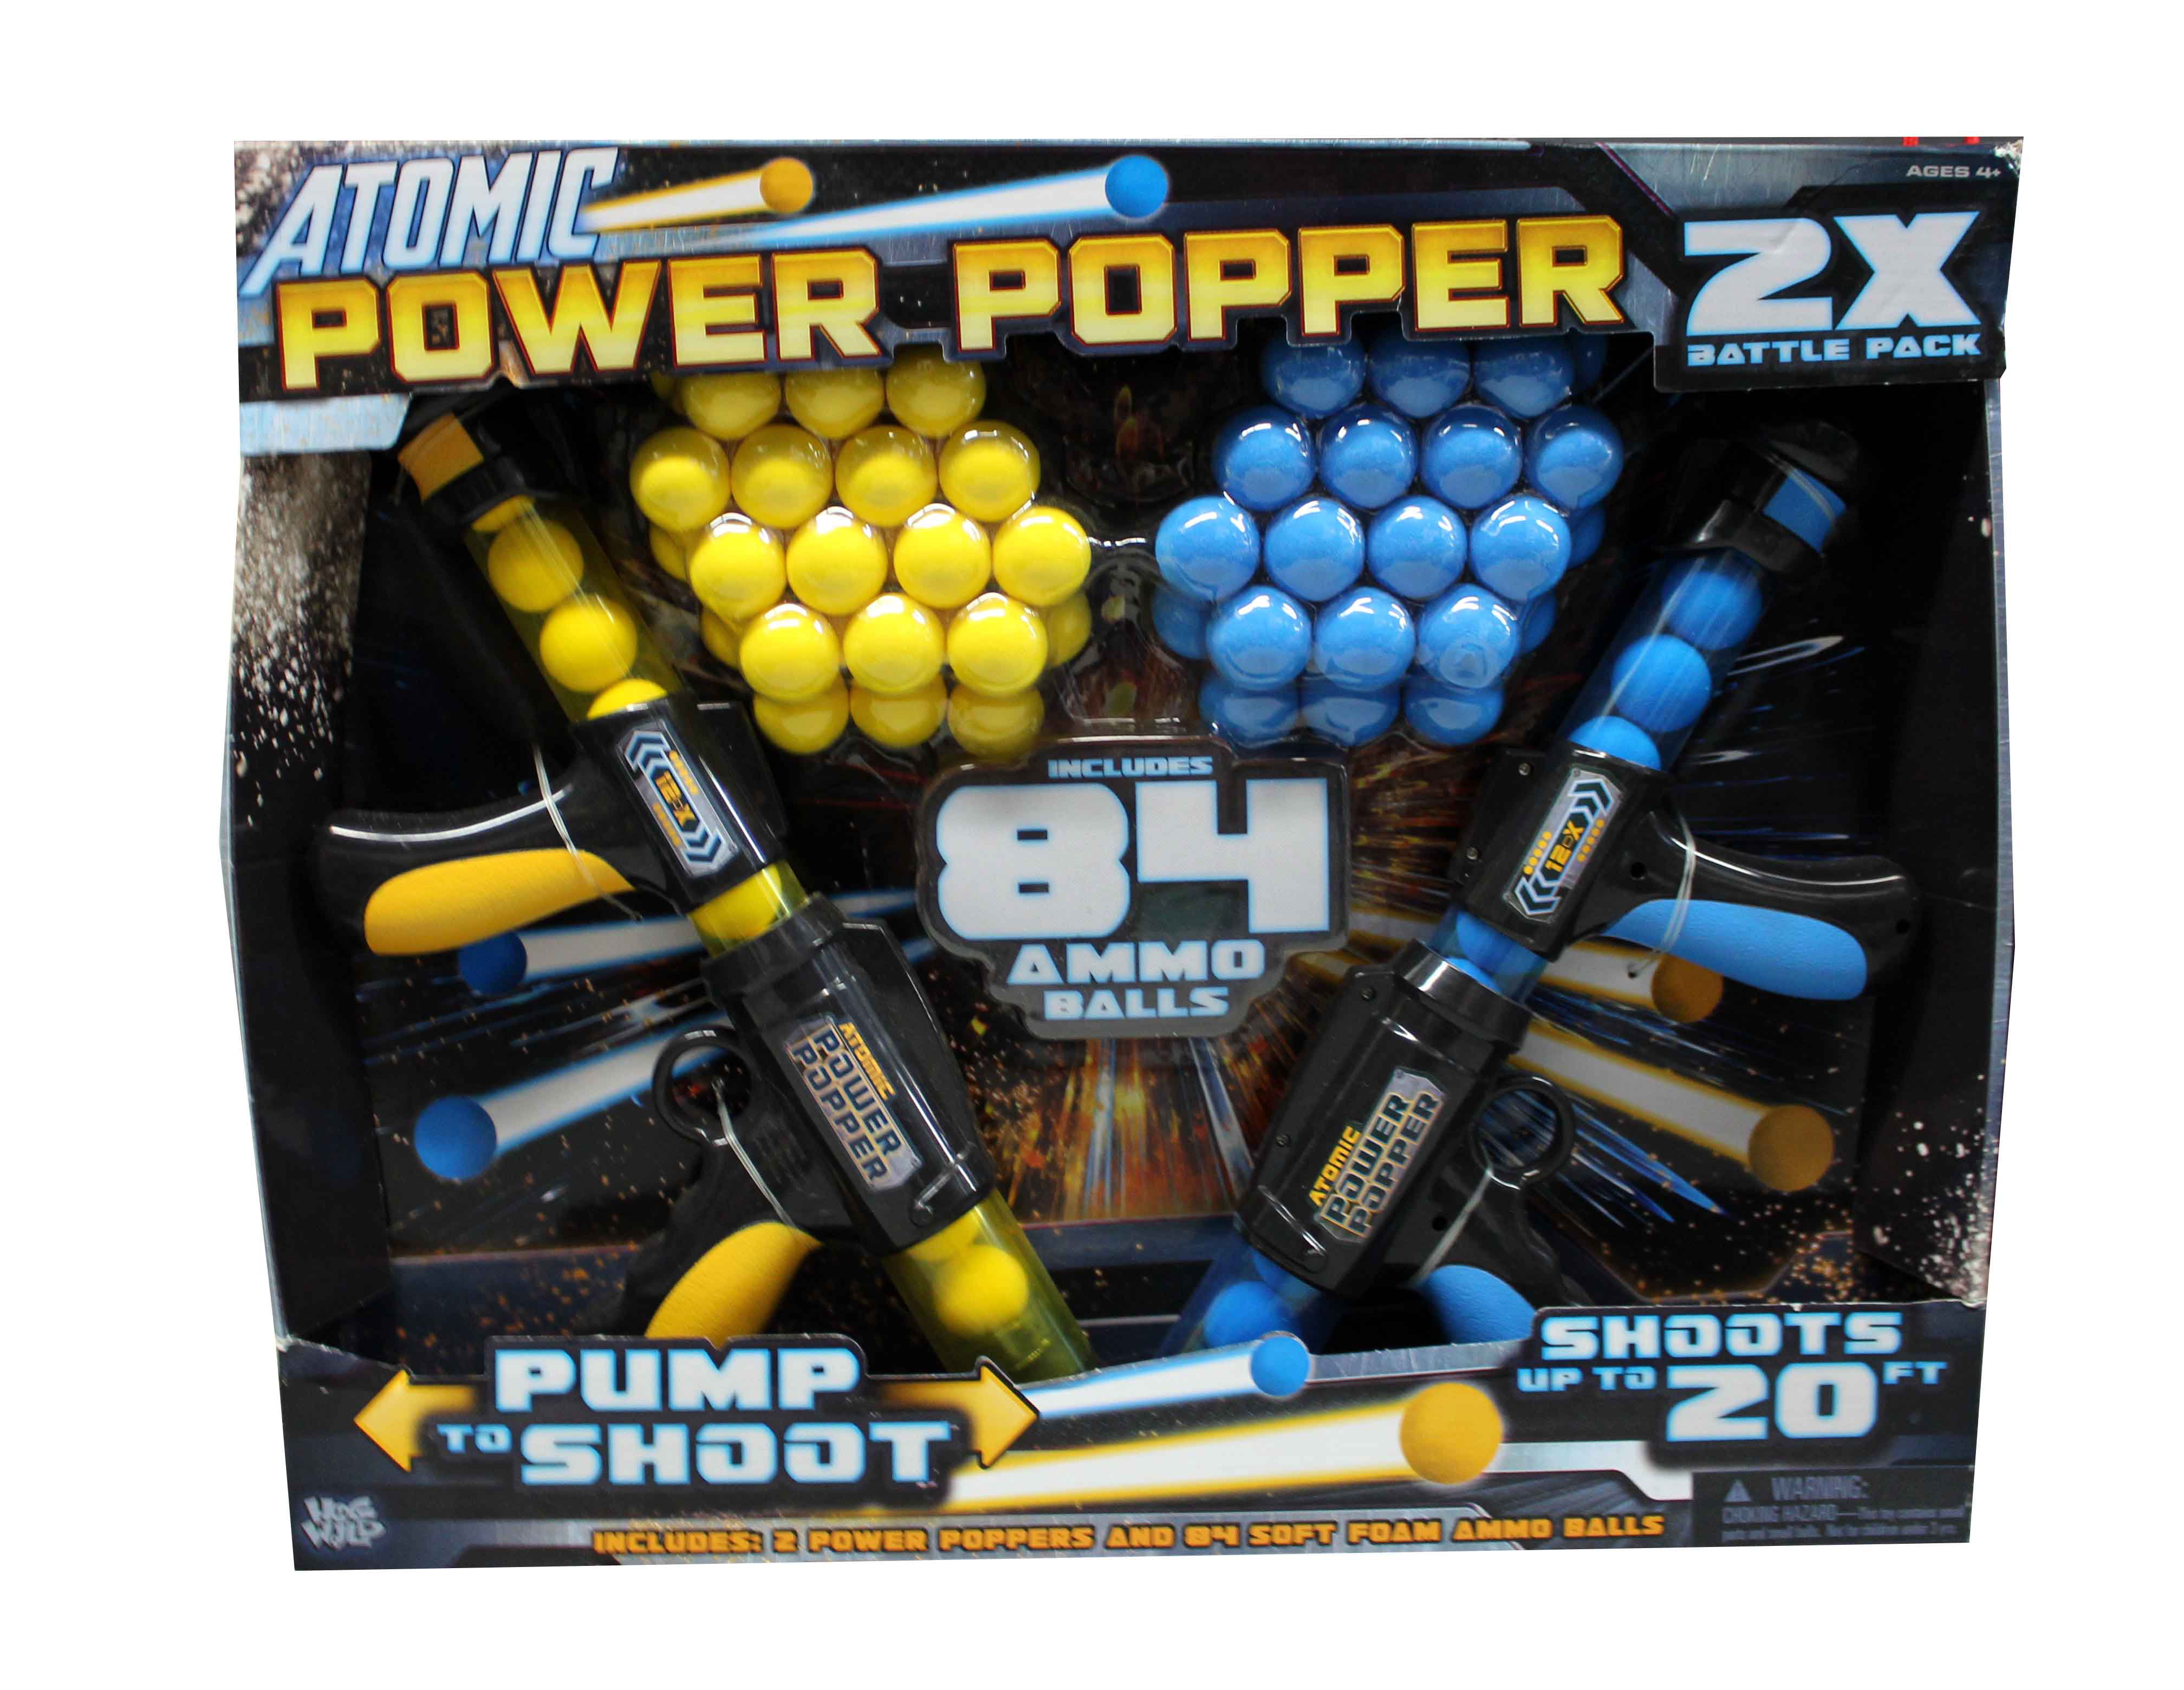 Hog Wild 2 X Atomic Power Popper Battle Pack With 84 Balls for sale online 